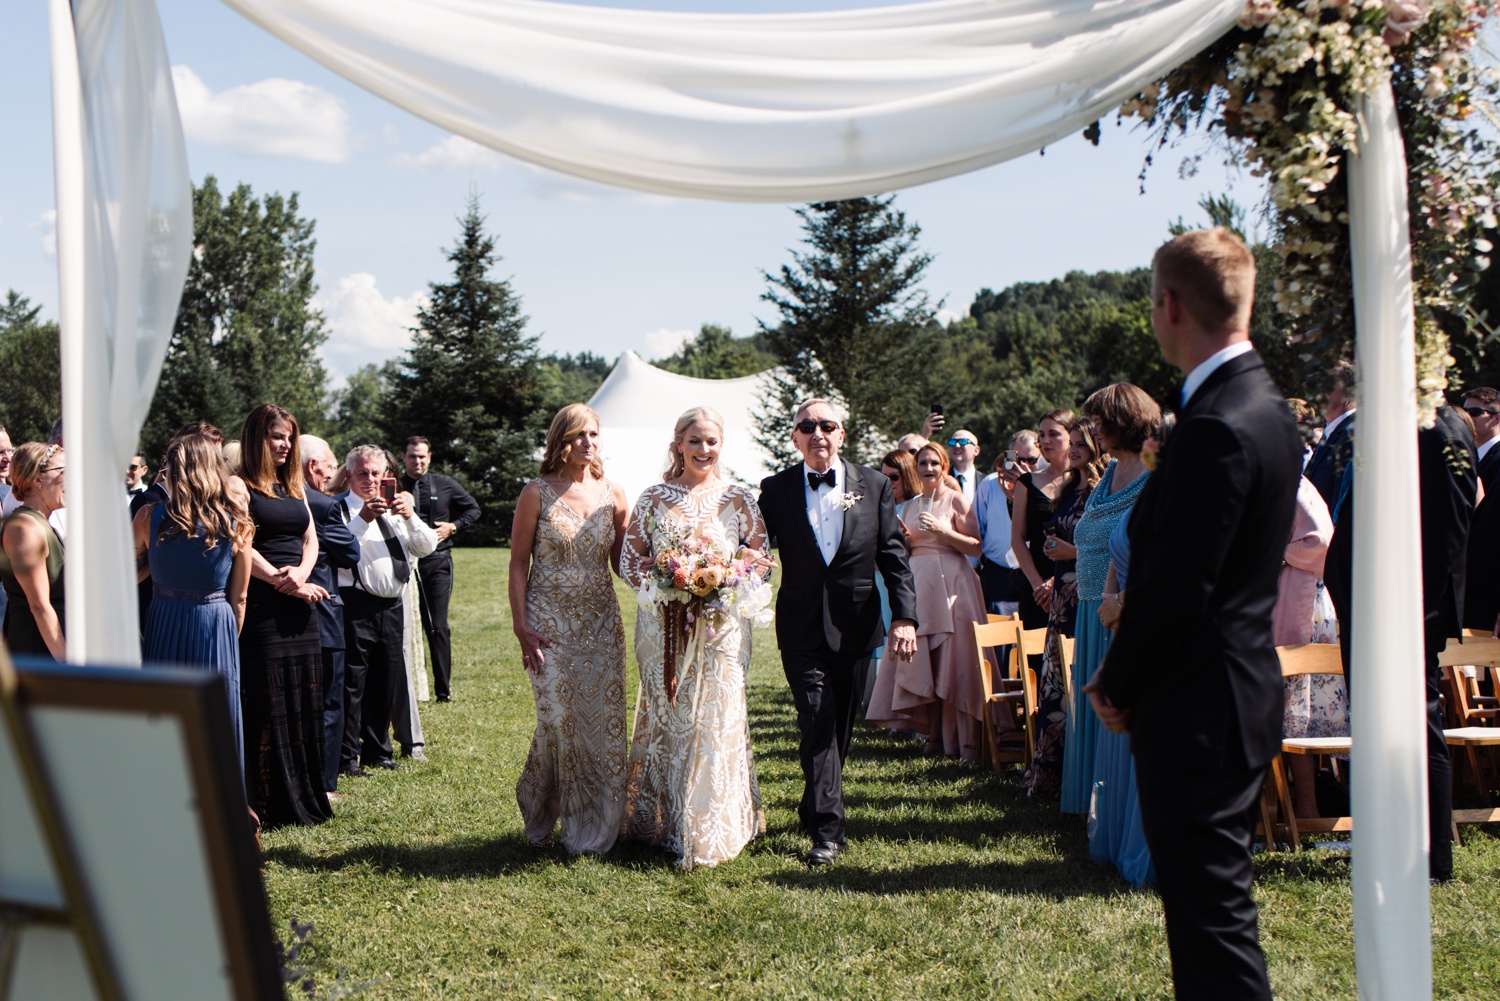 Summer outdoor wedding ceremony at Topnotch Resort